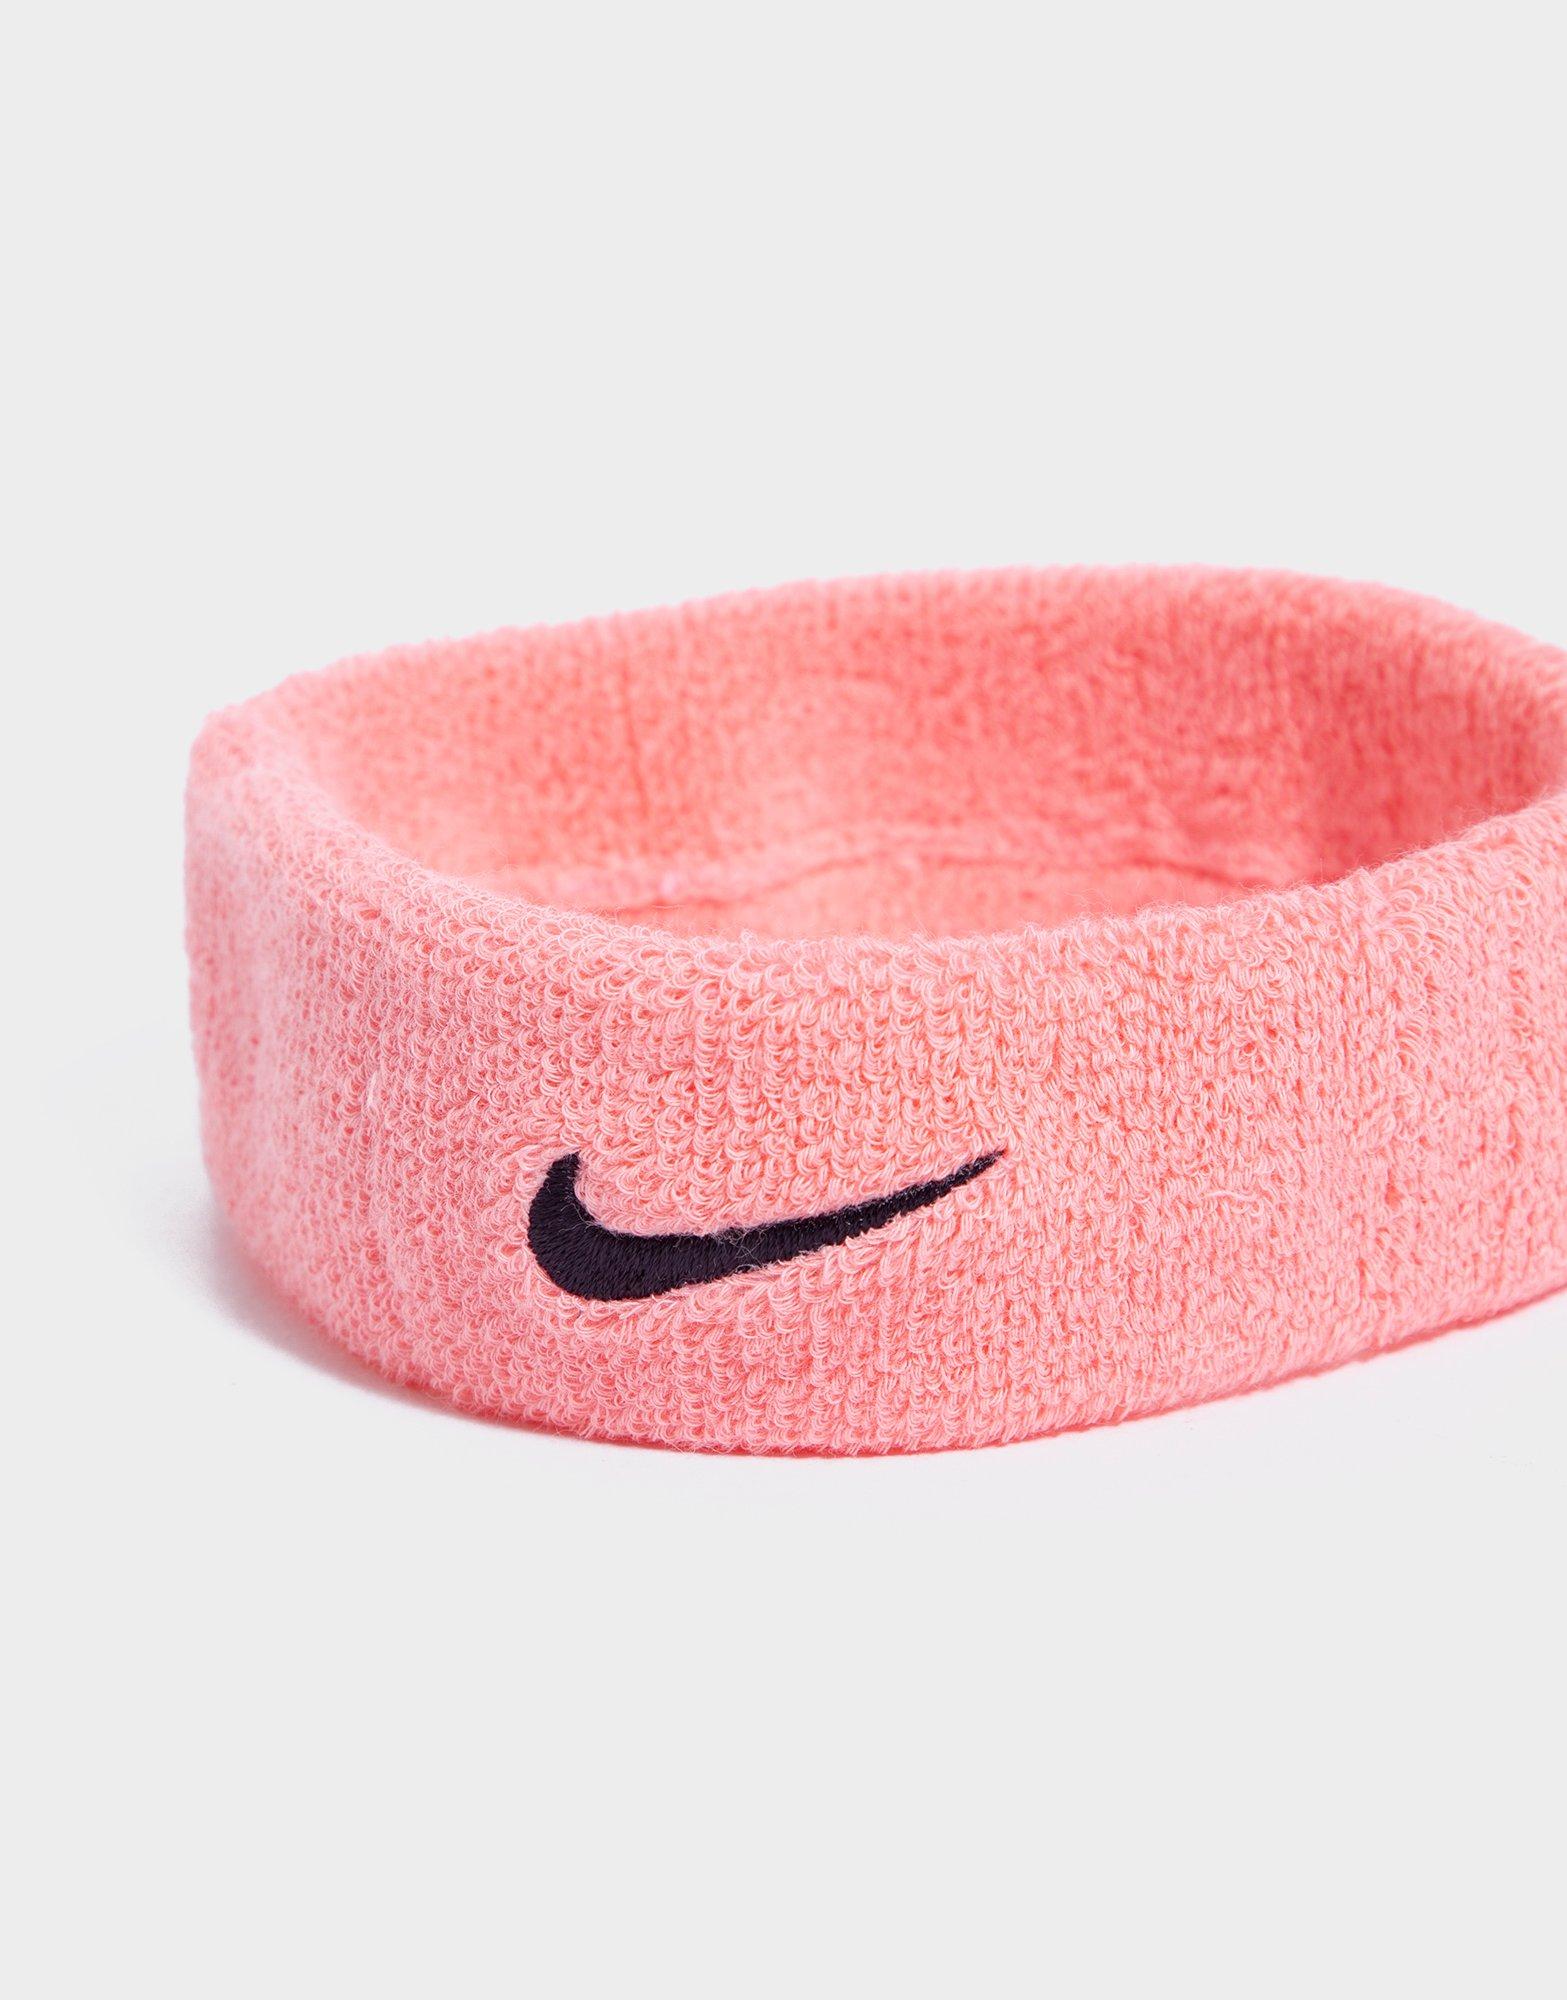 pink nike headband